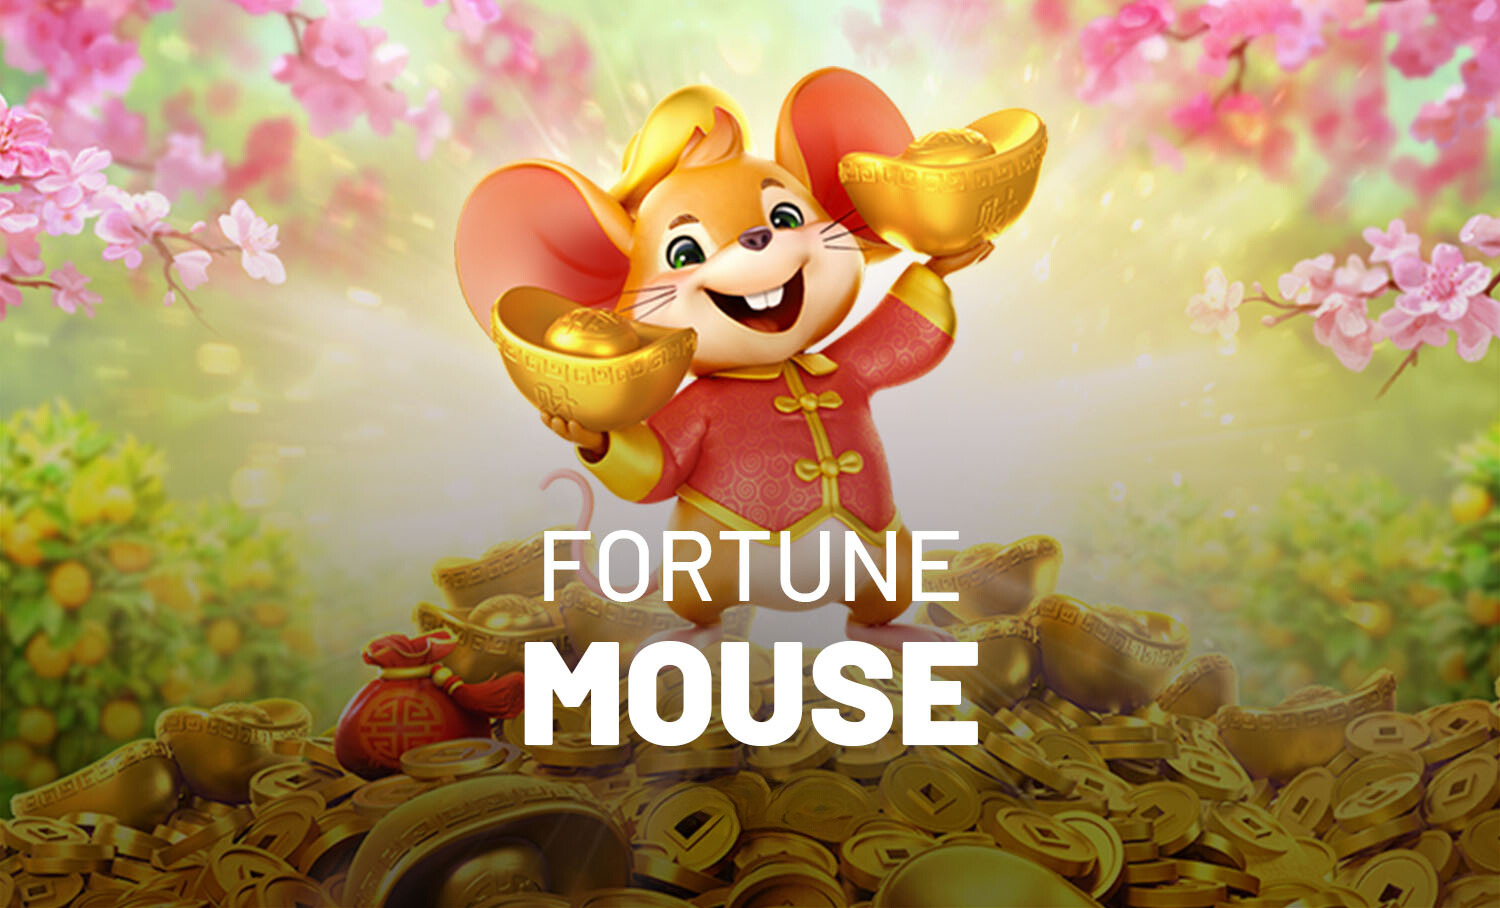 Fortune Mouse: Receba a sorte do rato na tela!